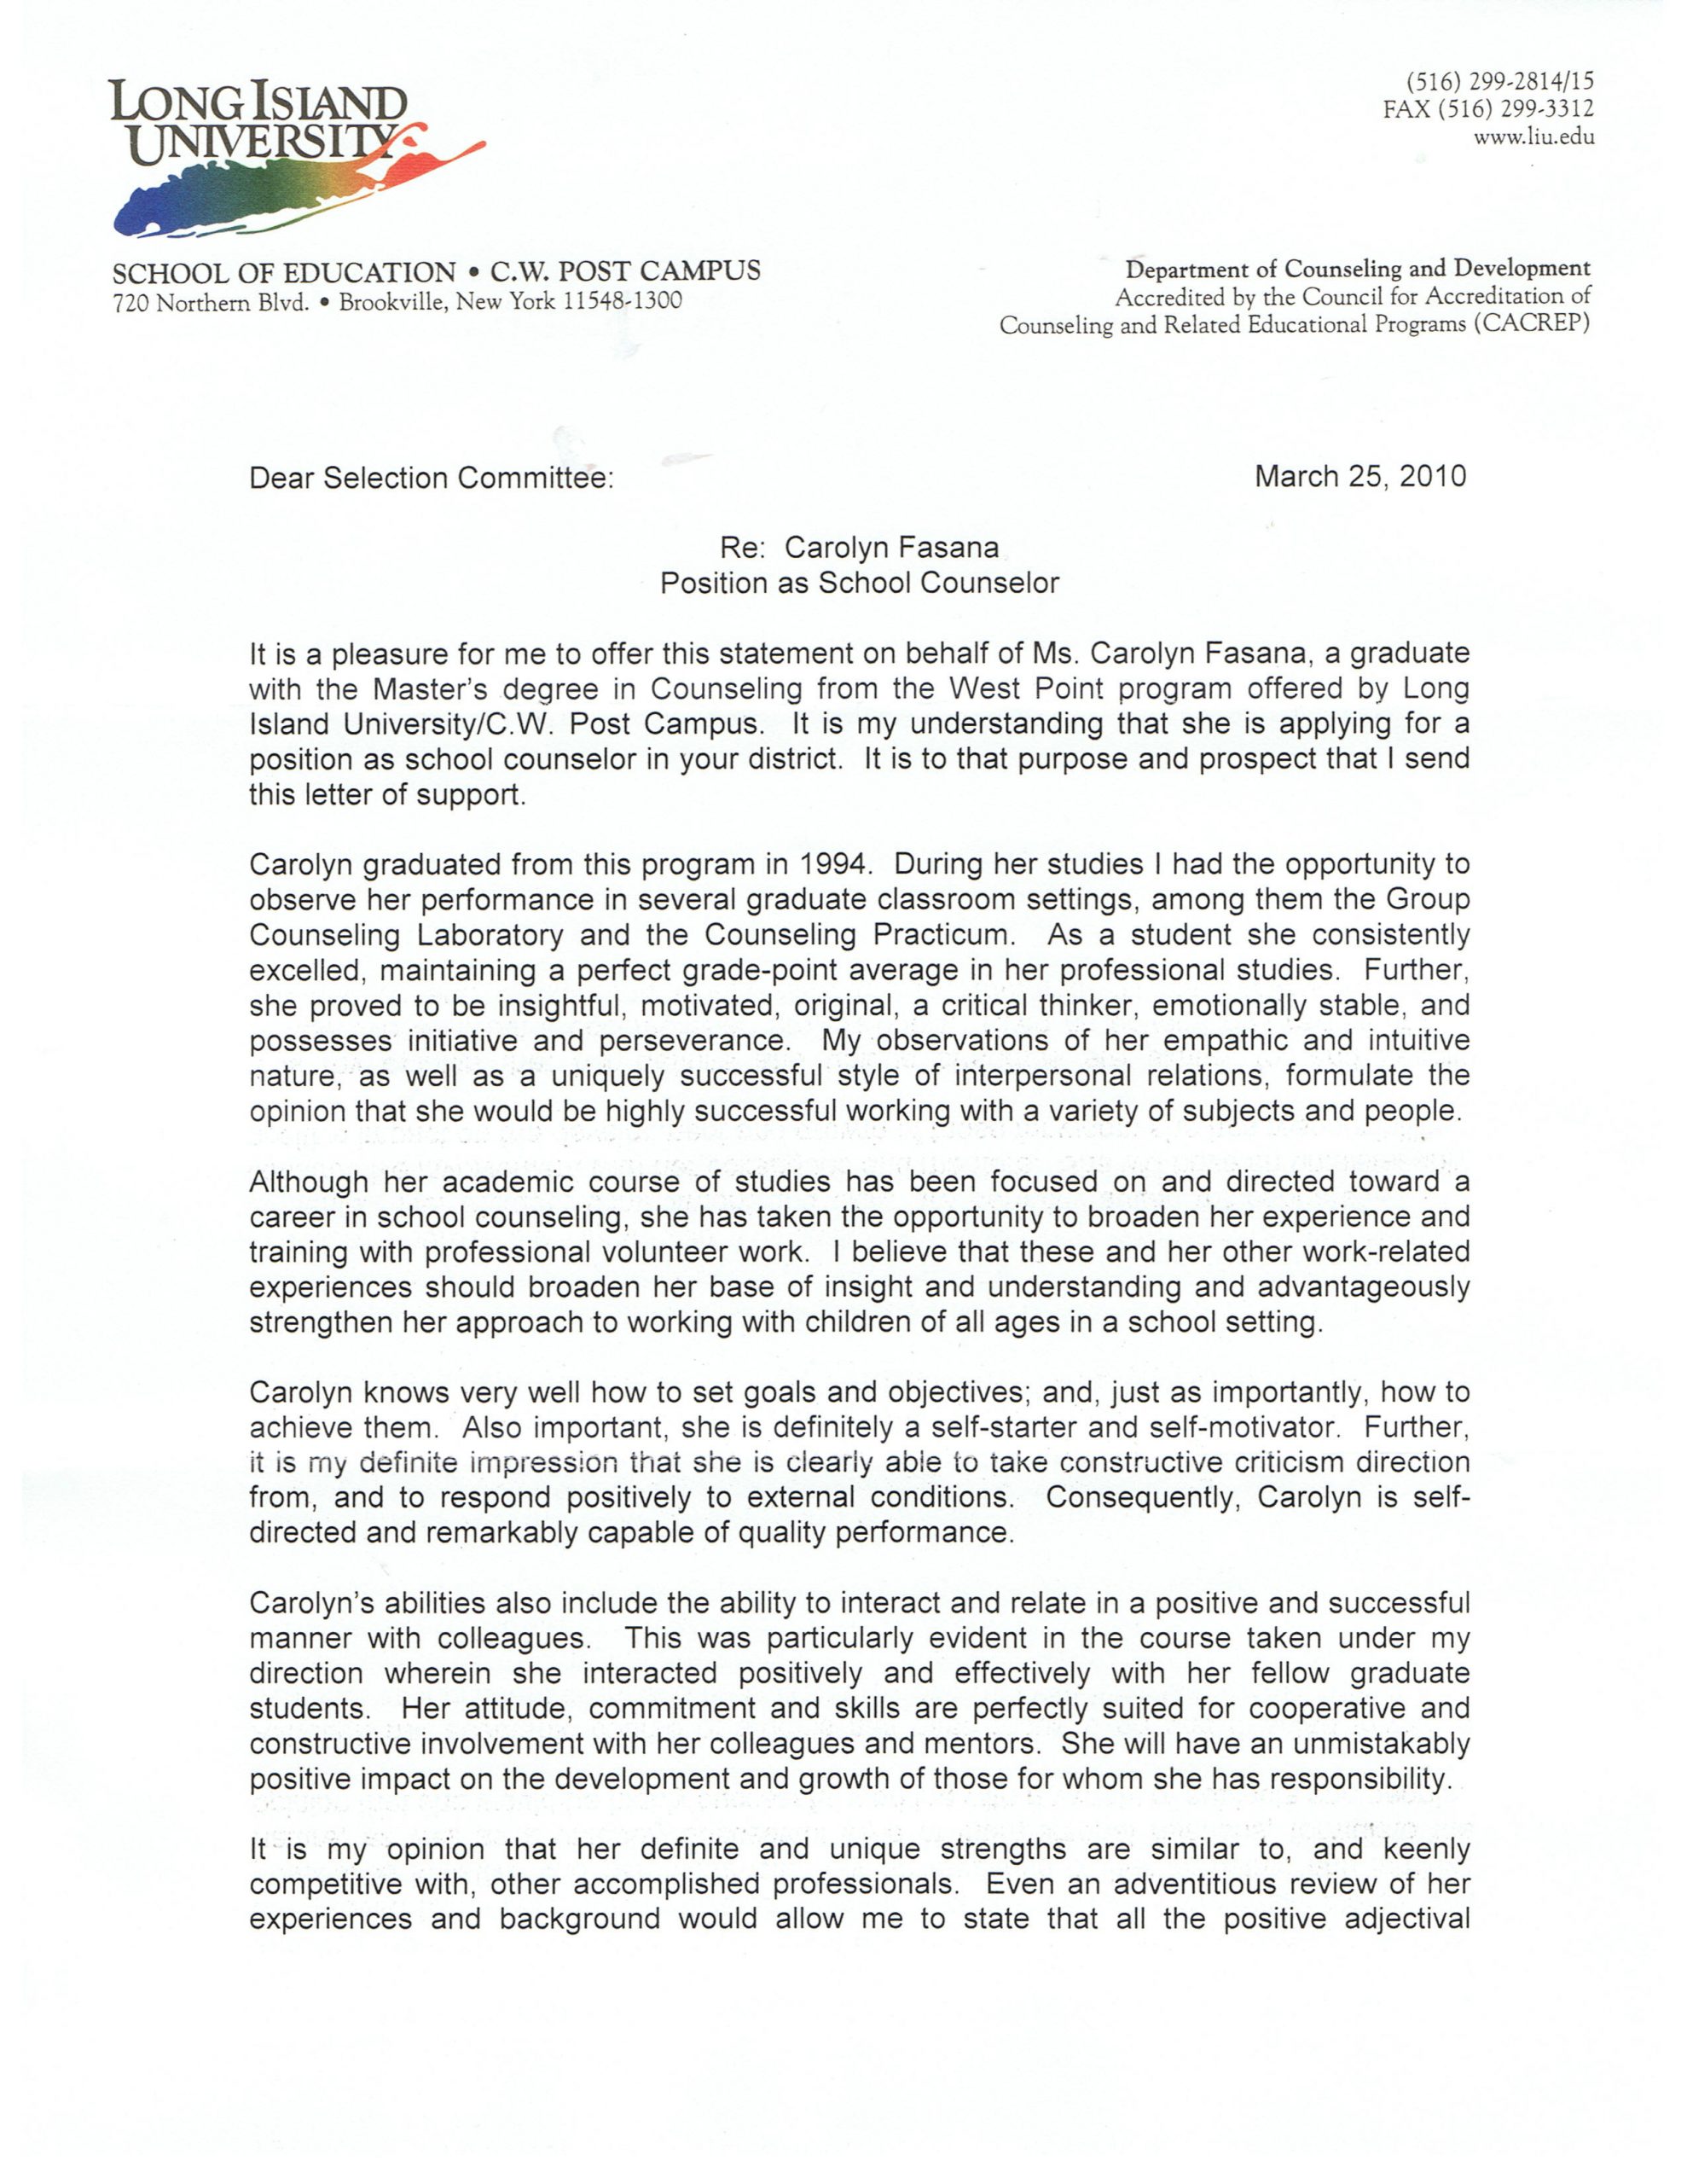 Letter Of Recommendation School Counselor Debandje inside dimensions 2550 X 3300